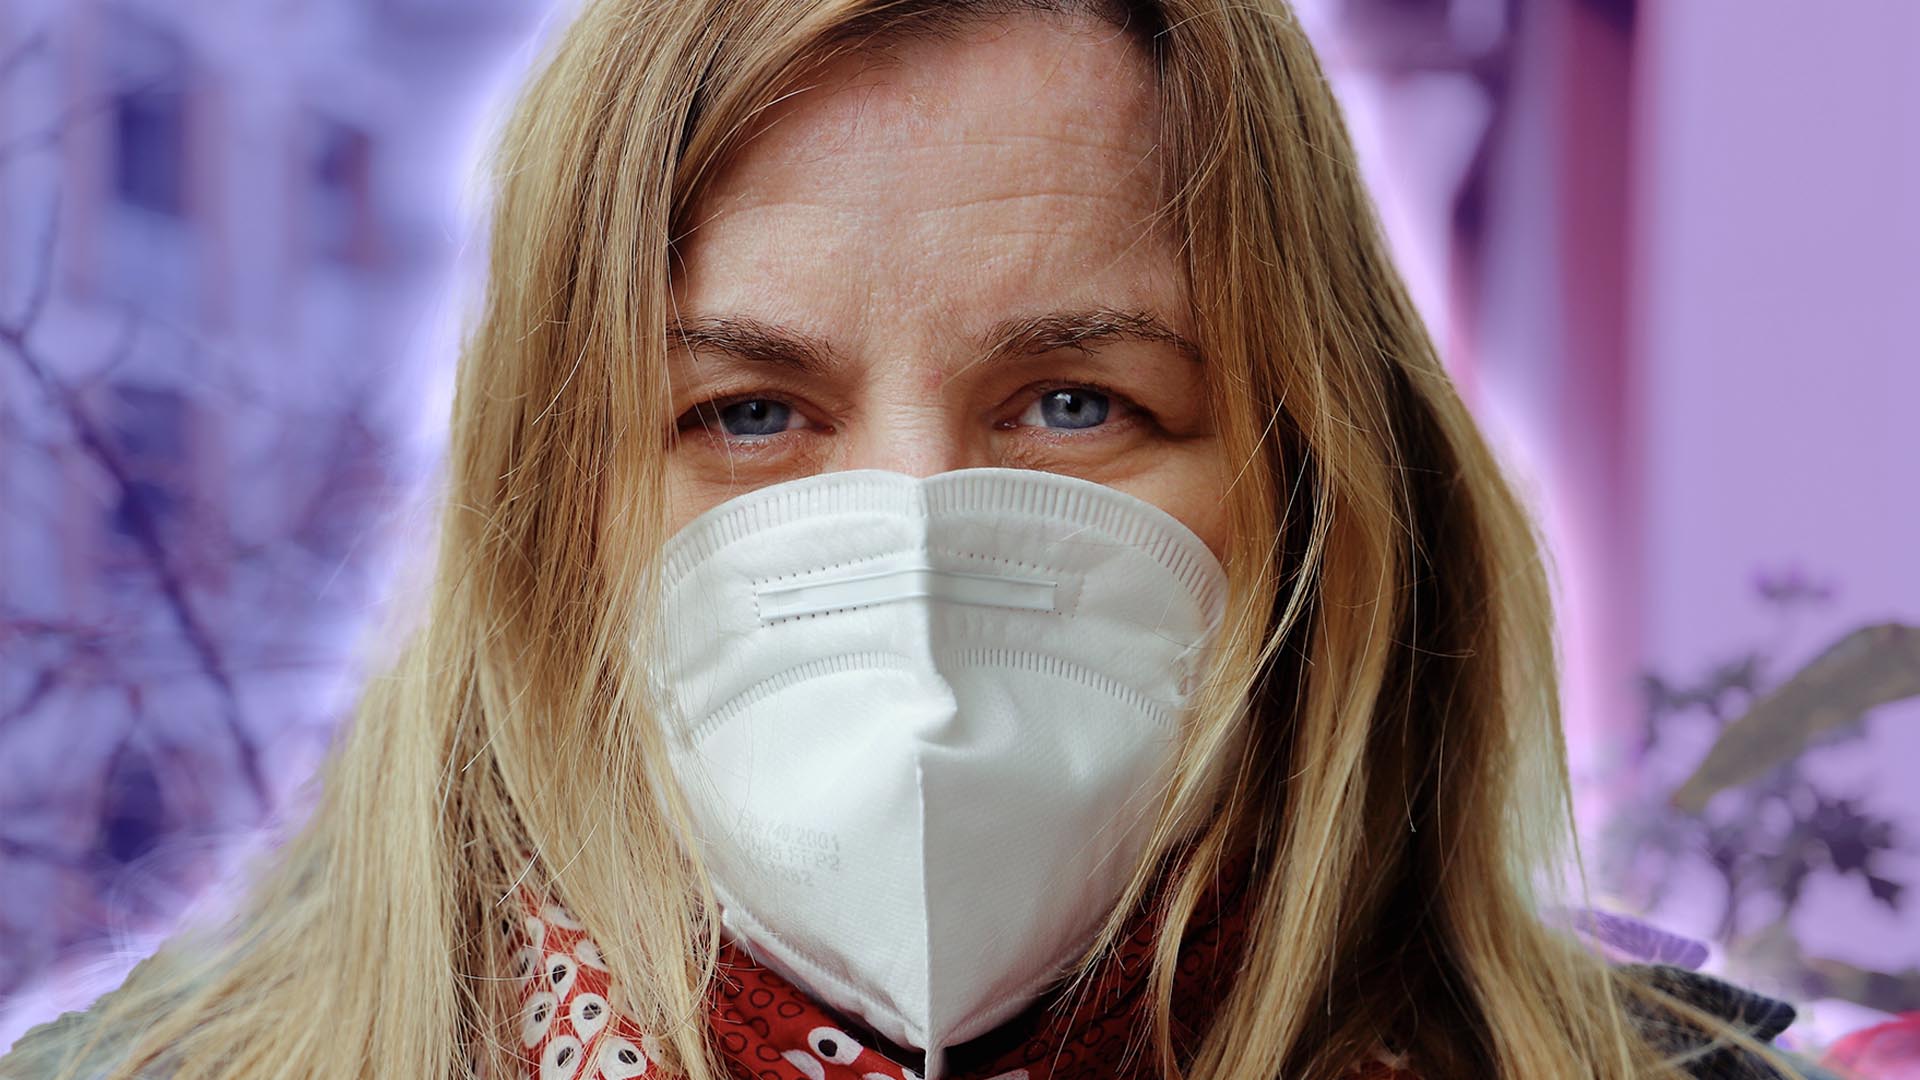 Woman with a mask has coronavirus